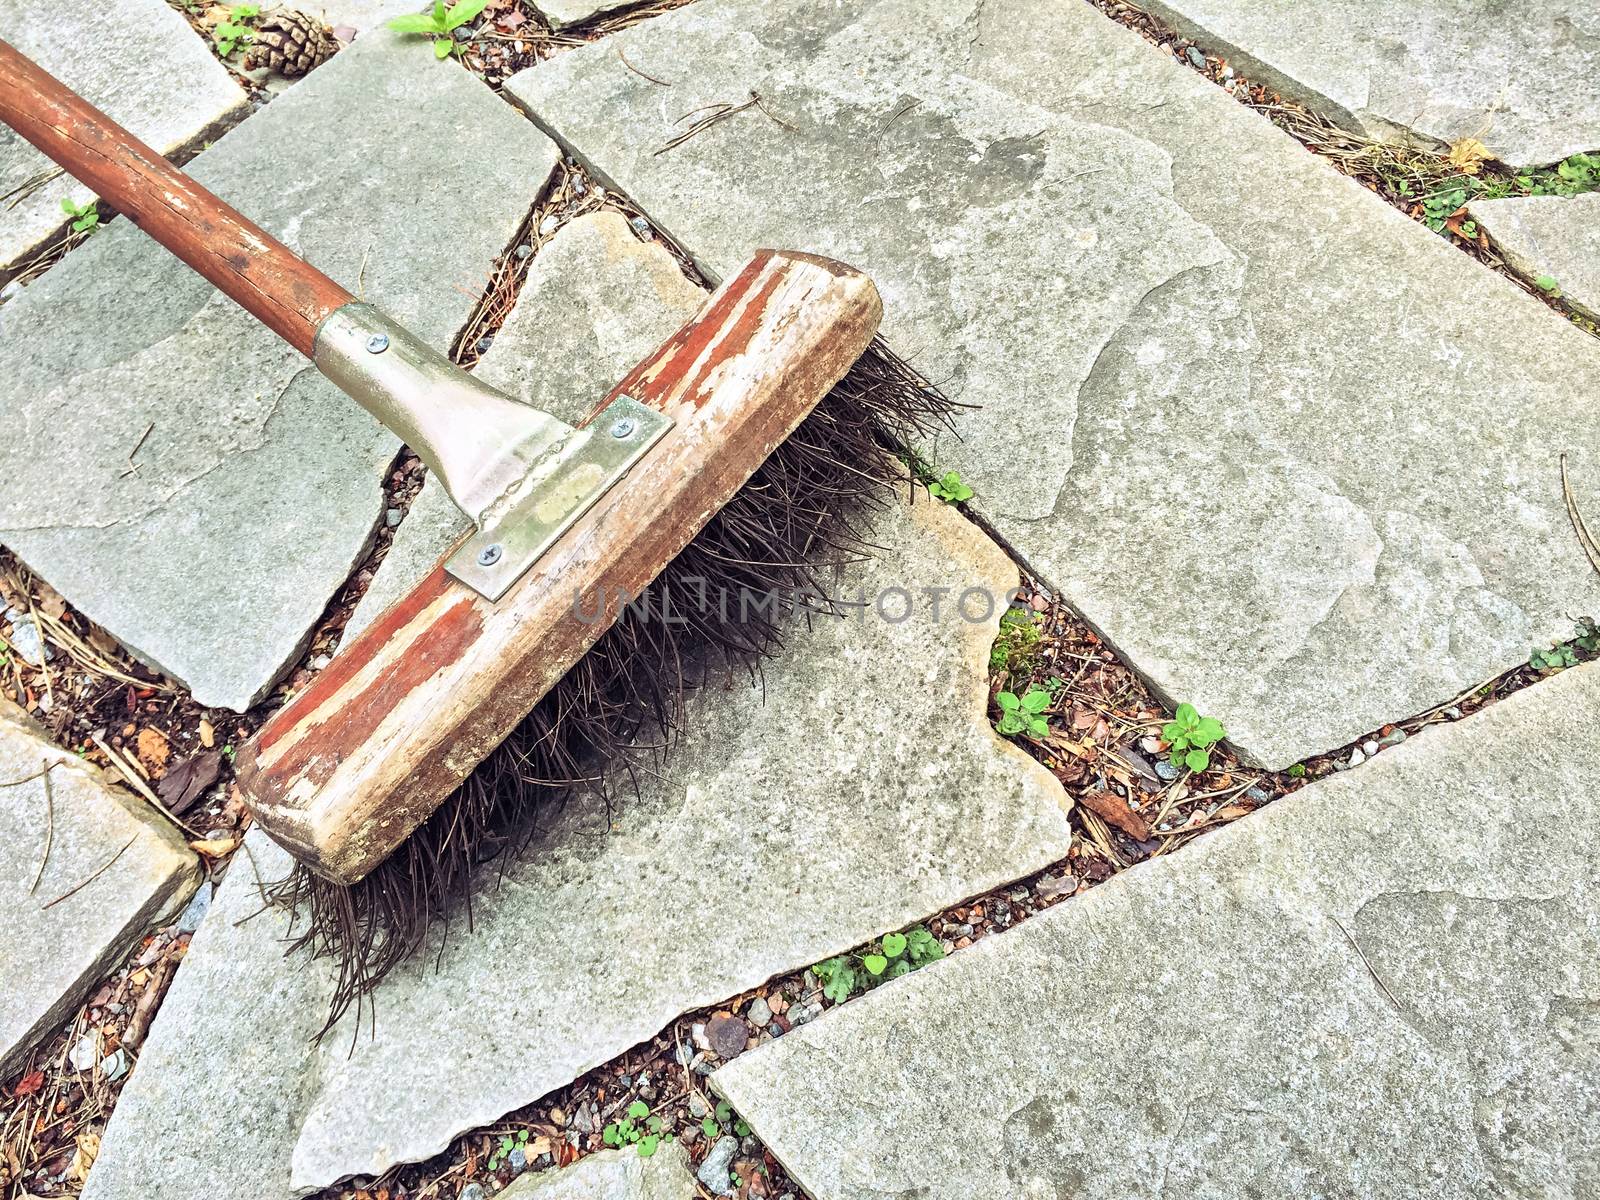 Broom on stone path in the garden by anikasalsera